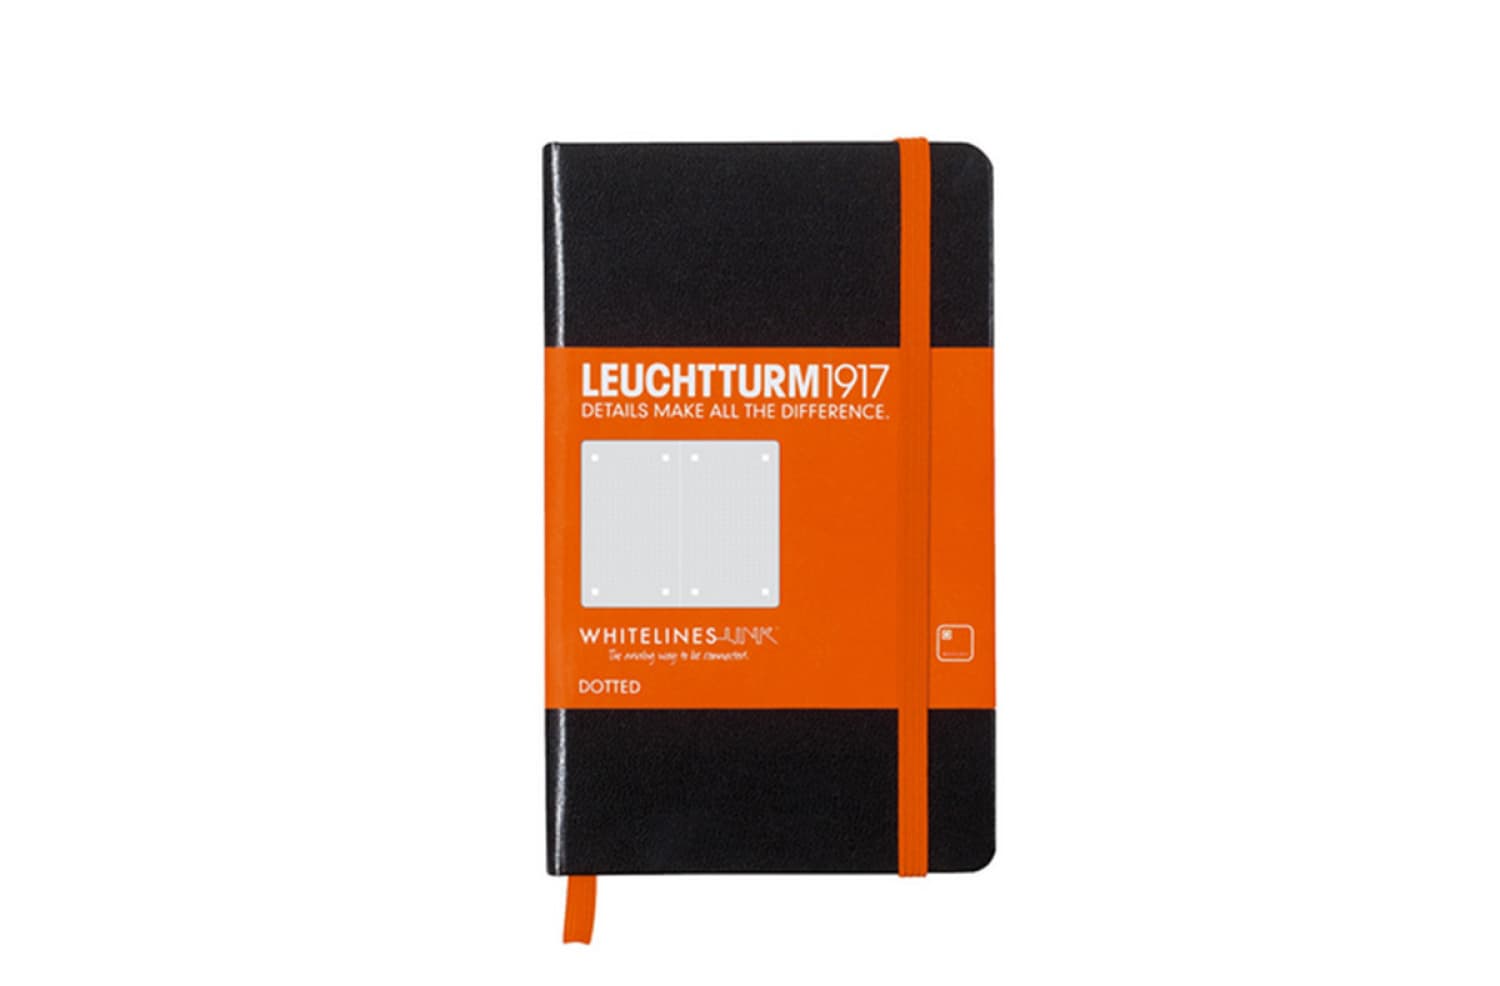 Leuchtturm1917 Whitelines Link Notebook Pocket Black Ruled